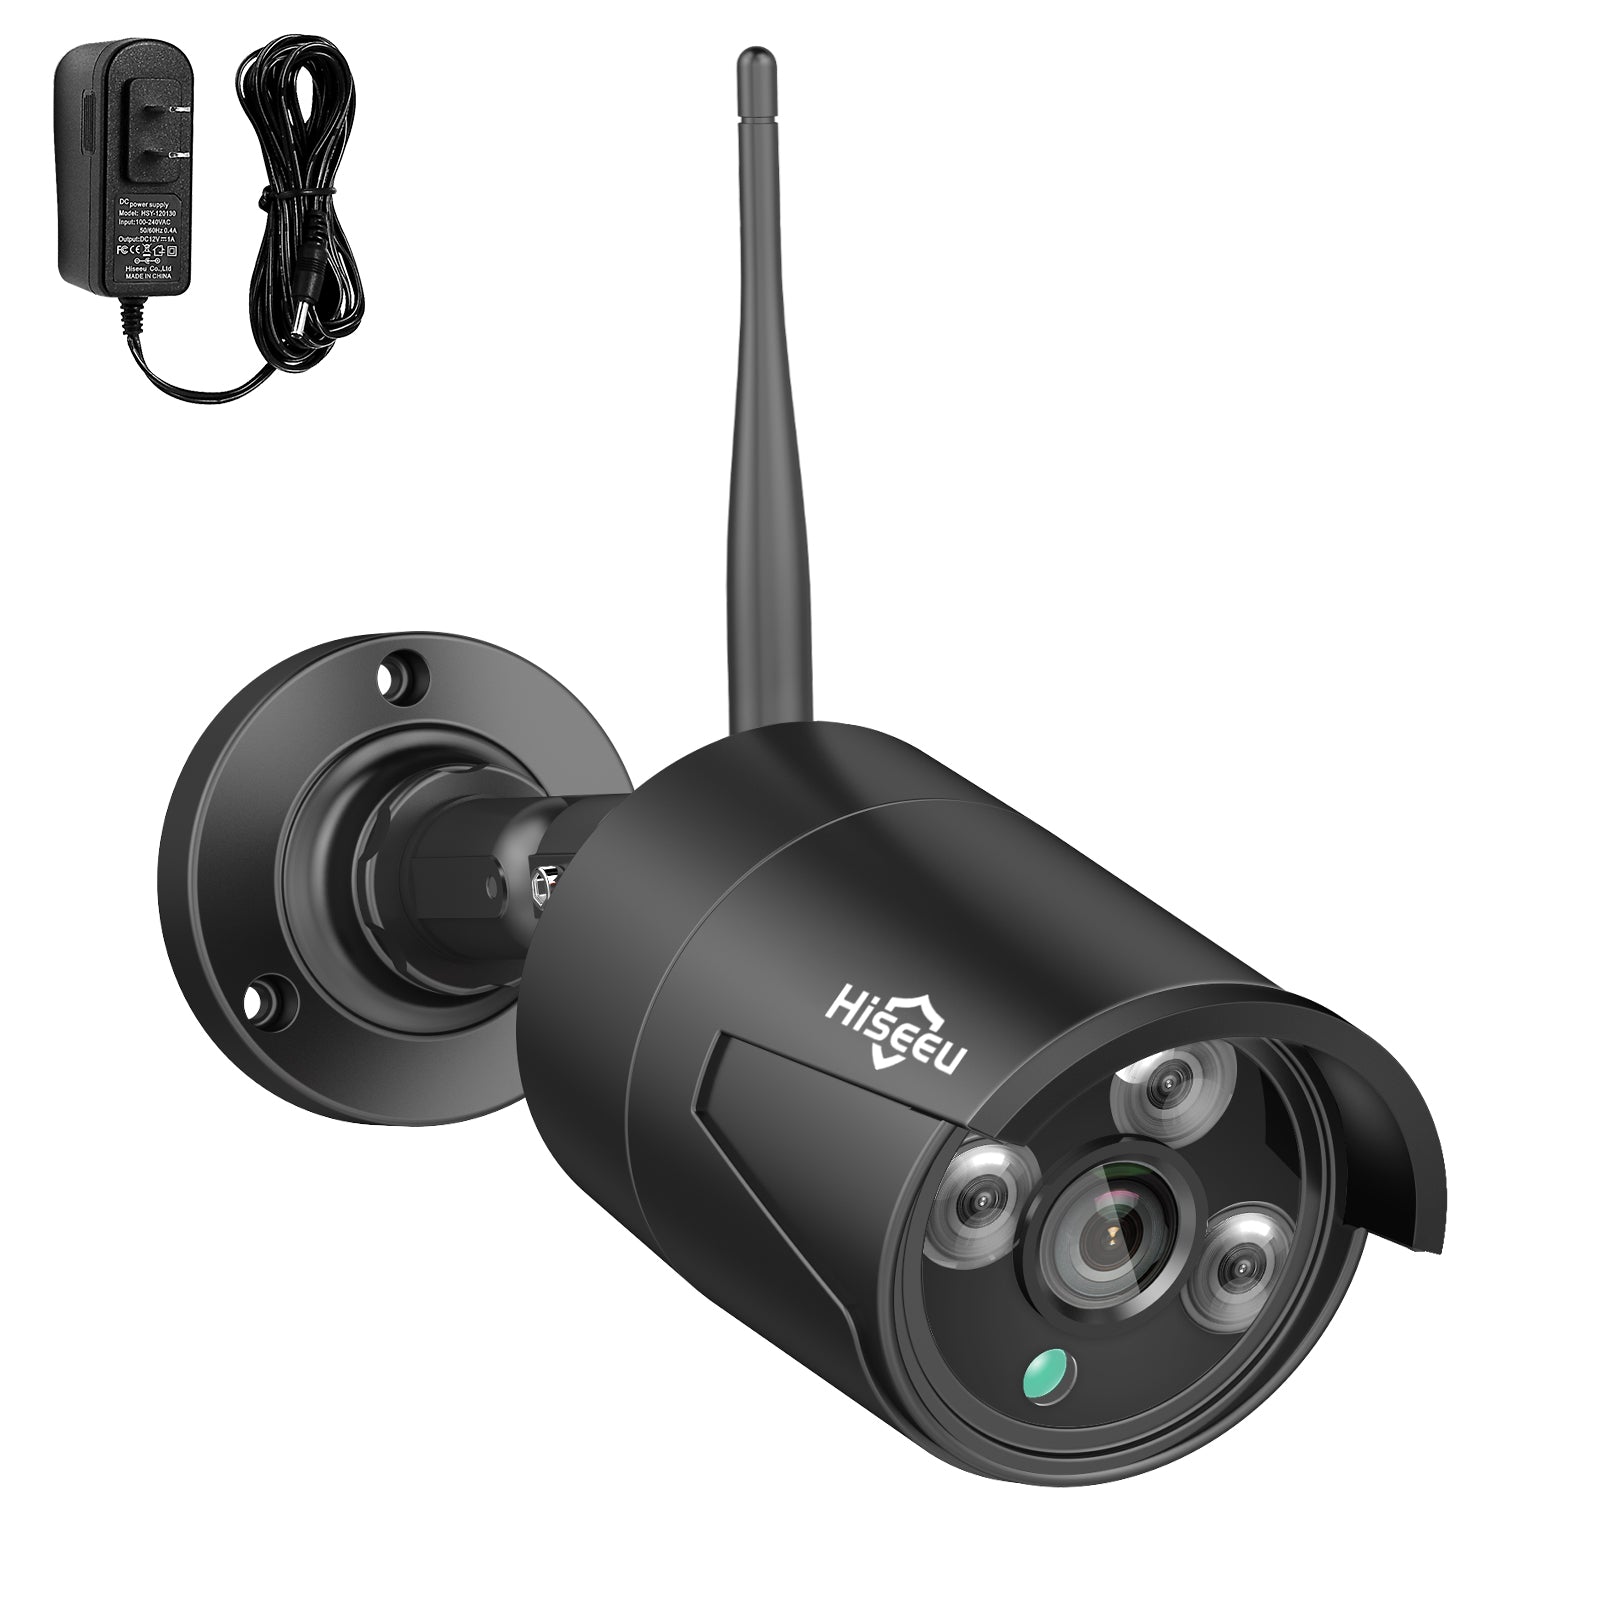 YI Home Camera Wireless IP Security Surveillance System-Black - GeeWiz